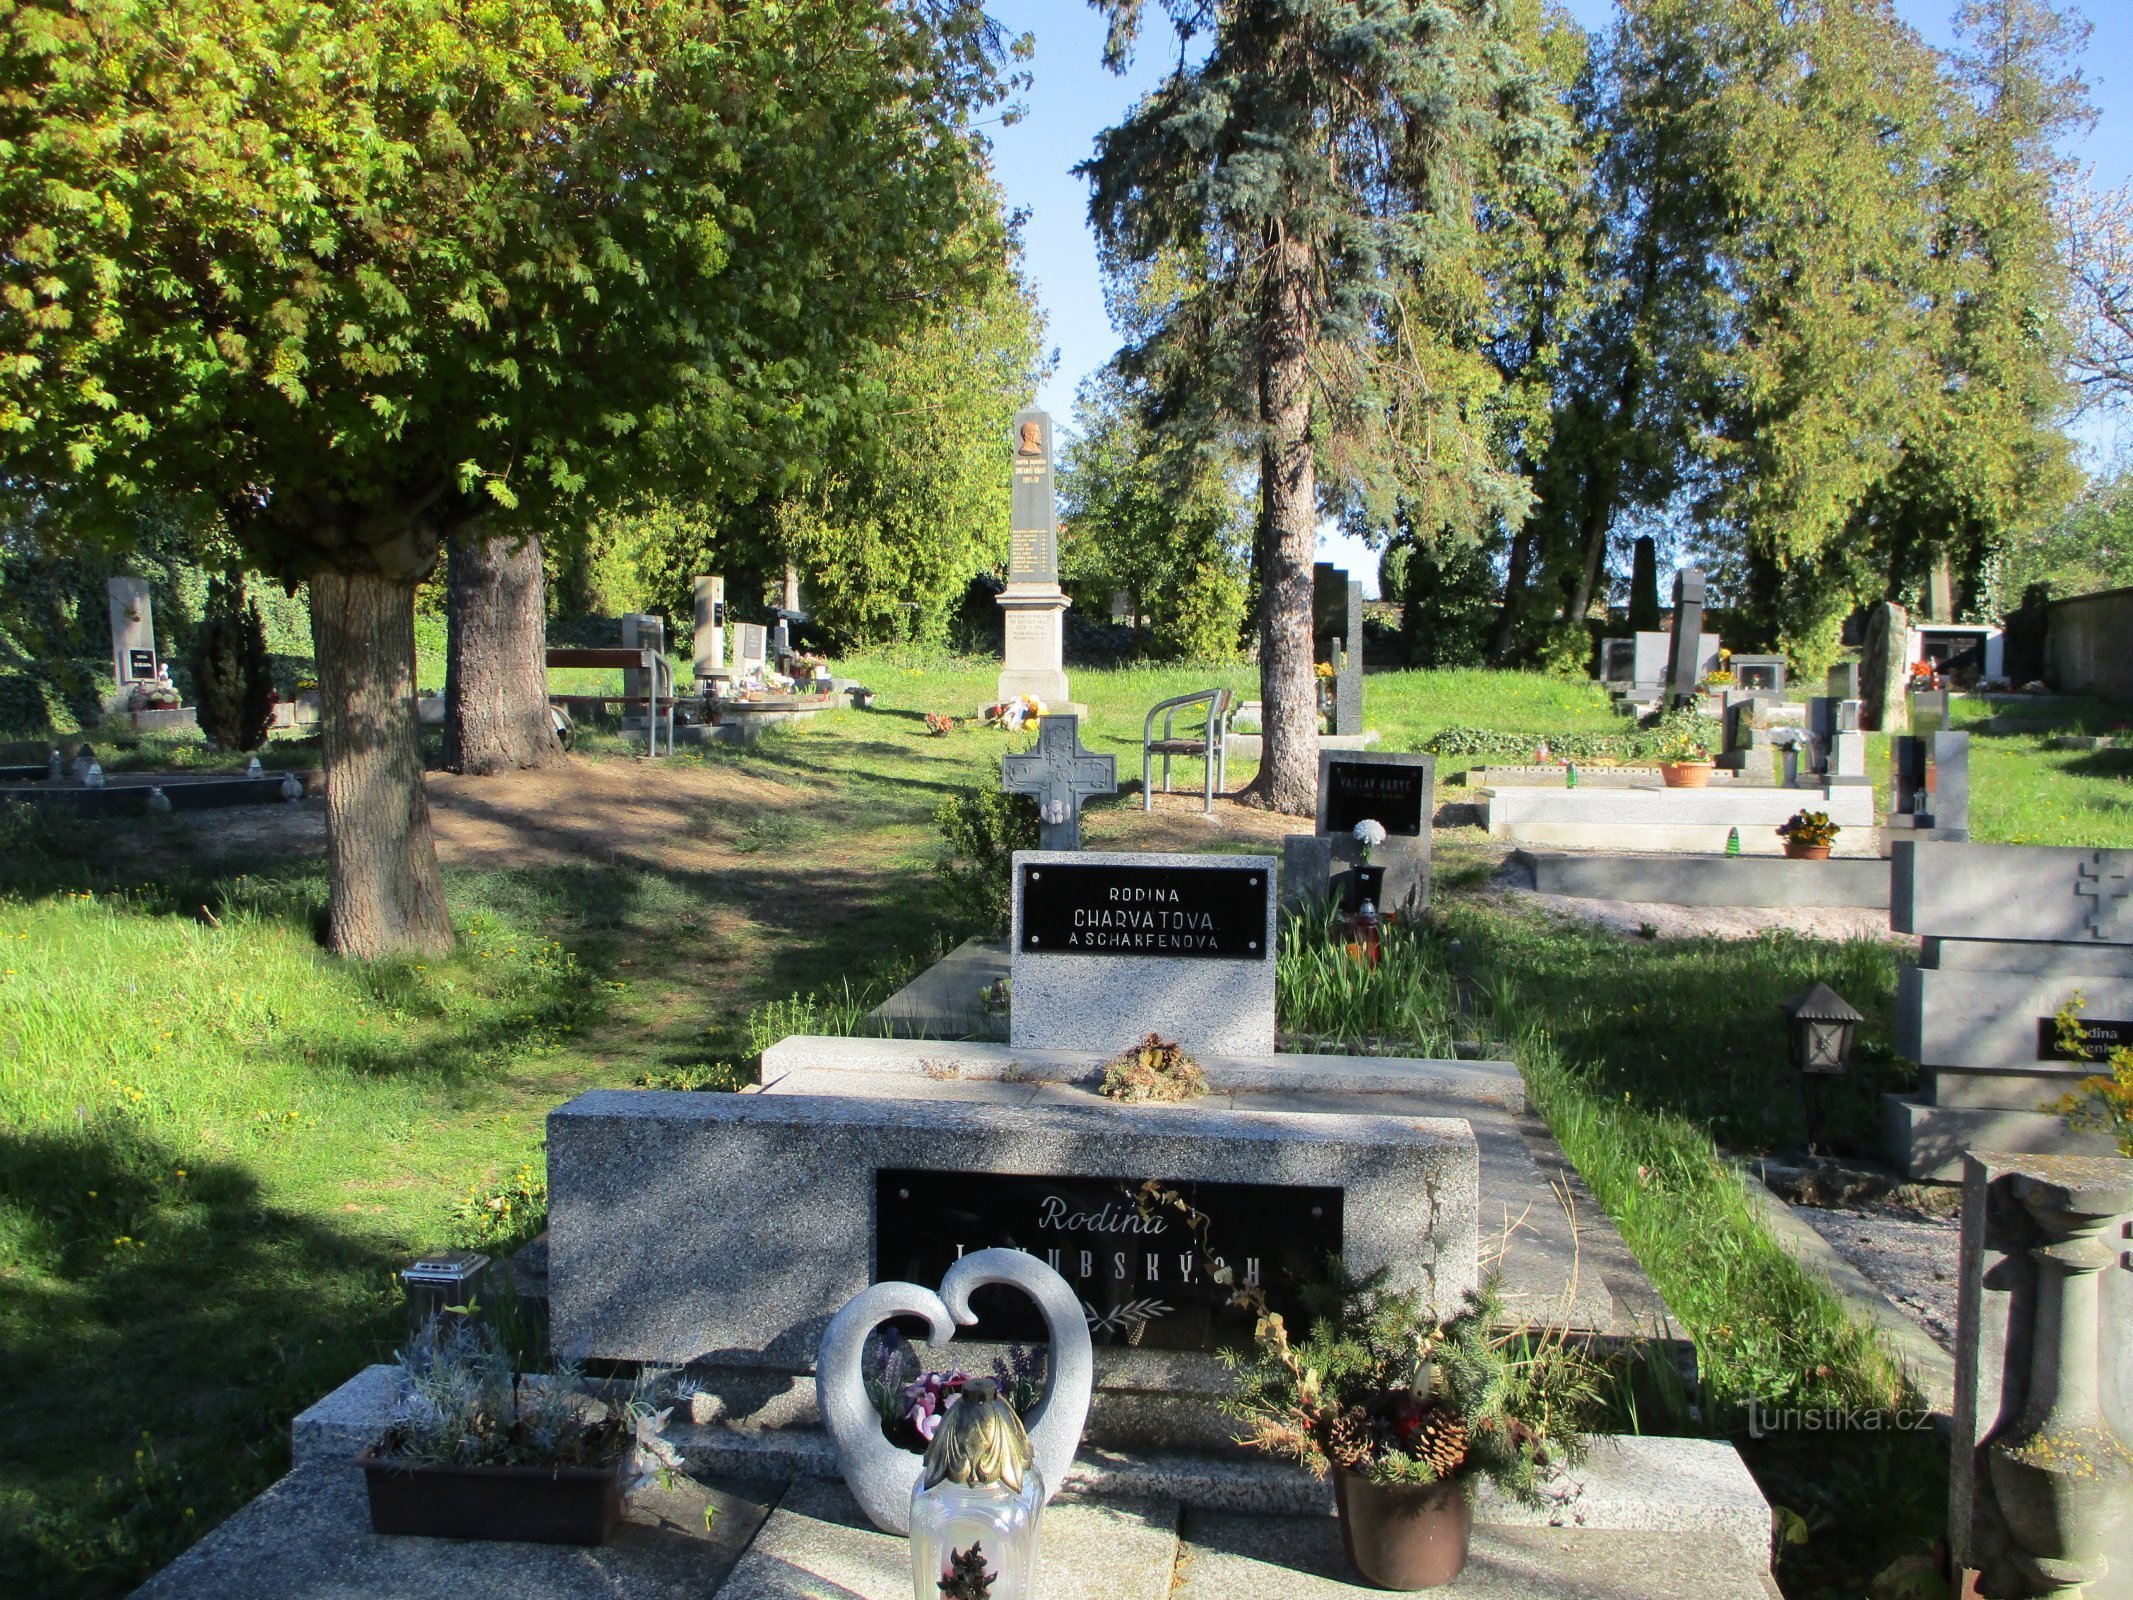 Hřbitov (Jezbiny, 22.4.2020)